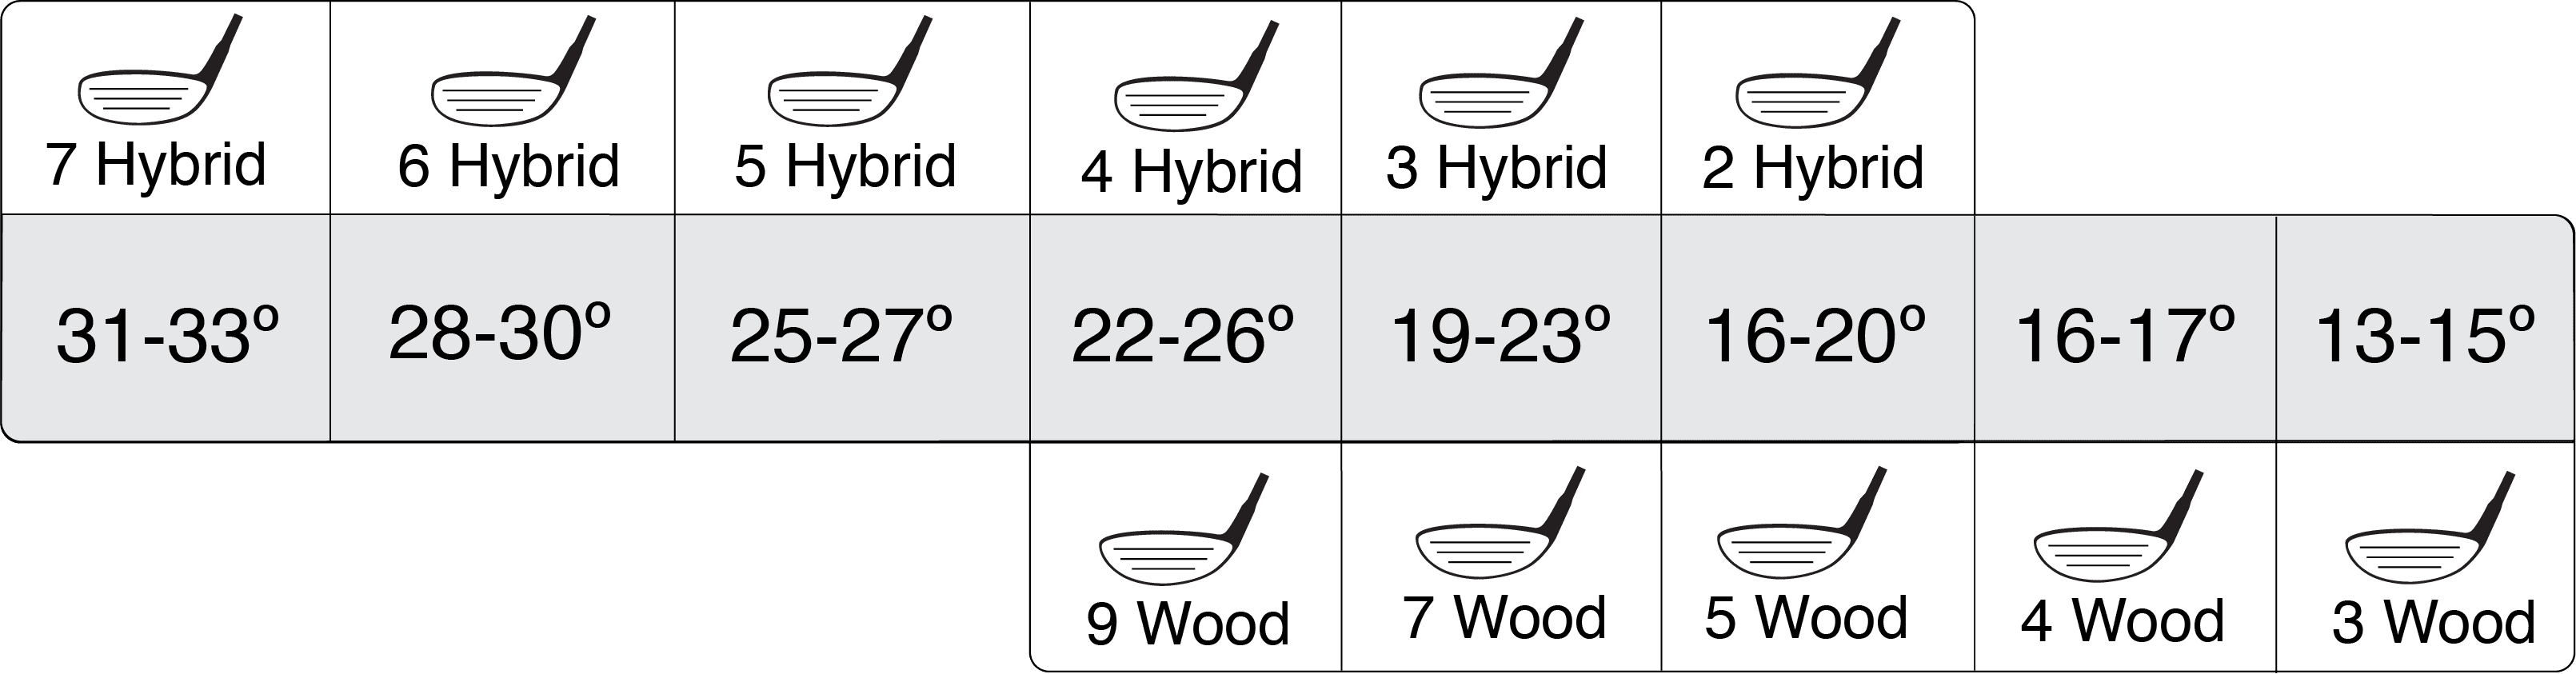 Hybrid Golf Club Degree Chart